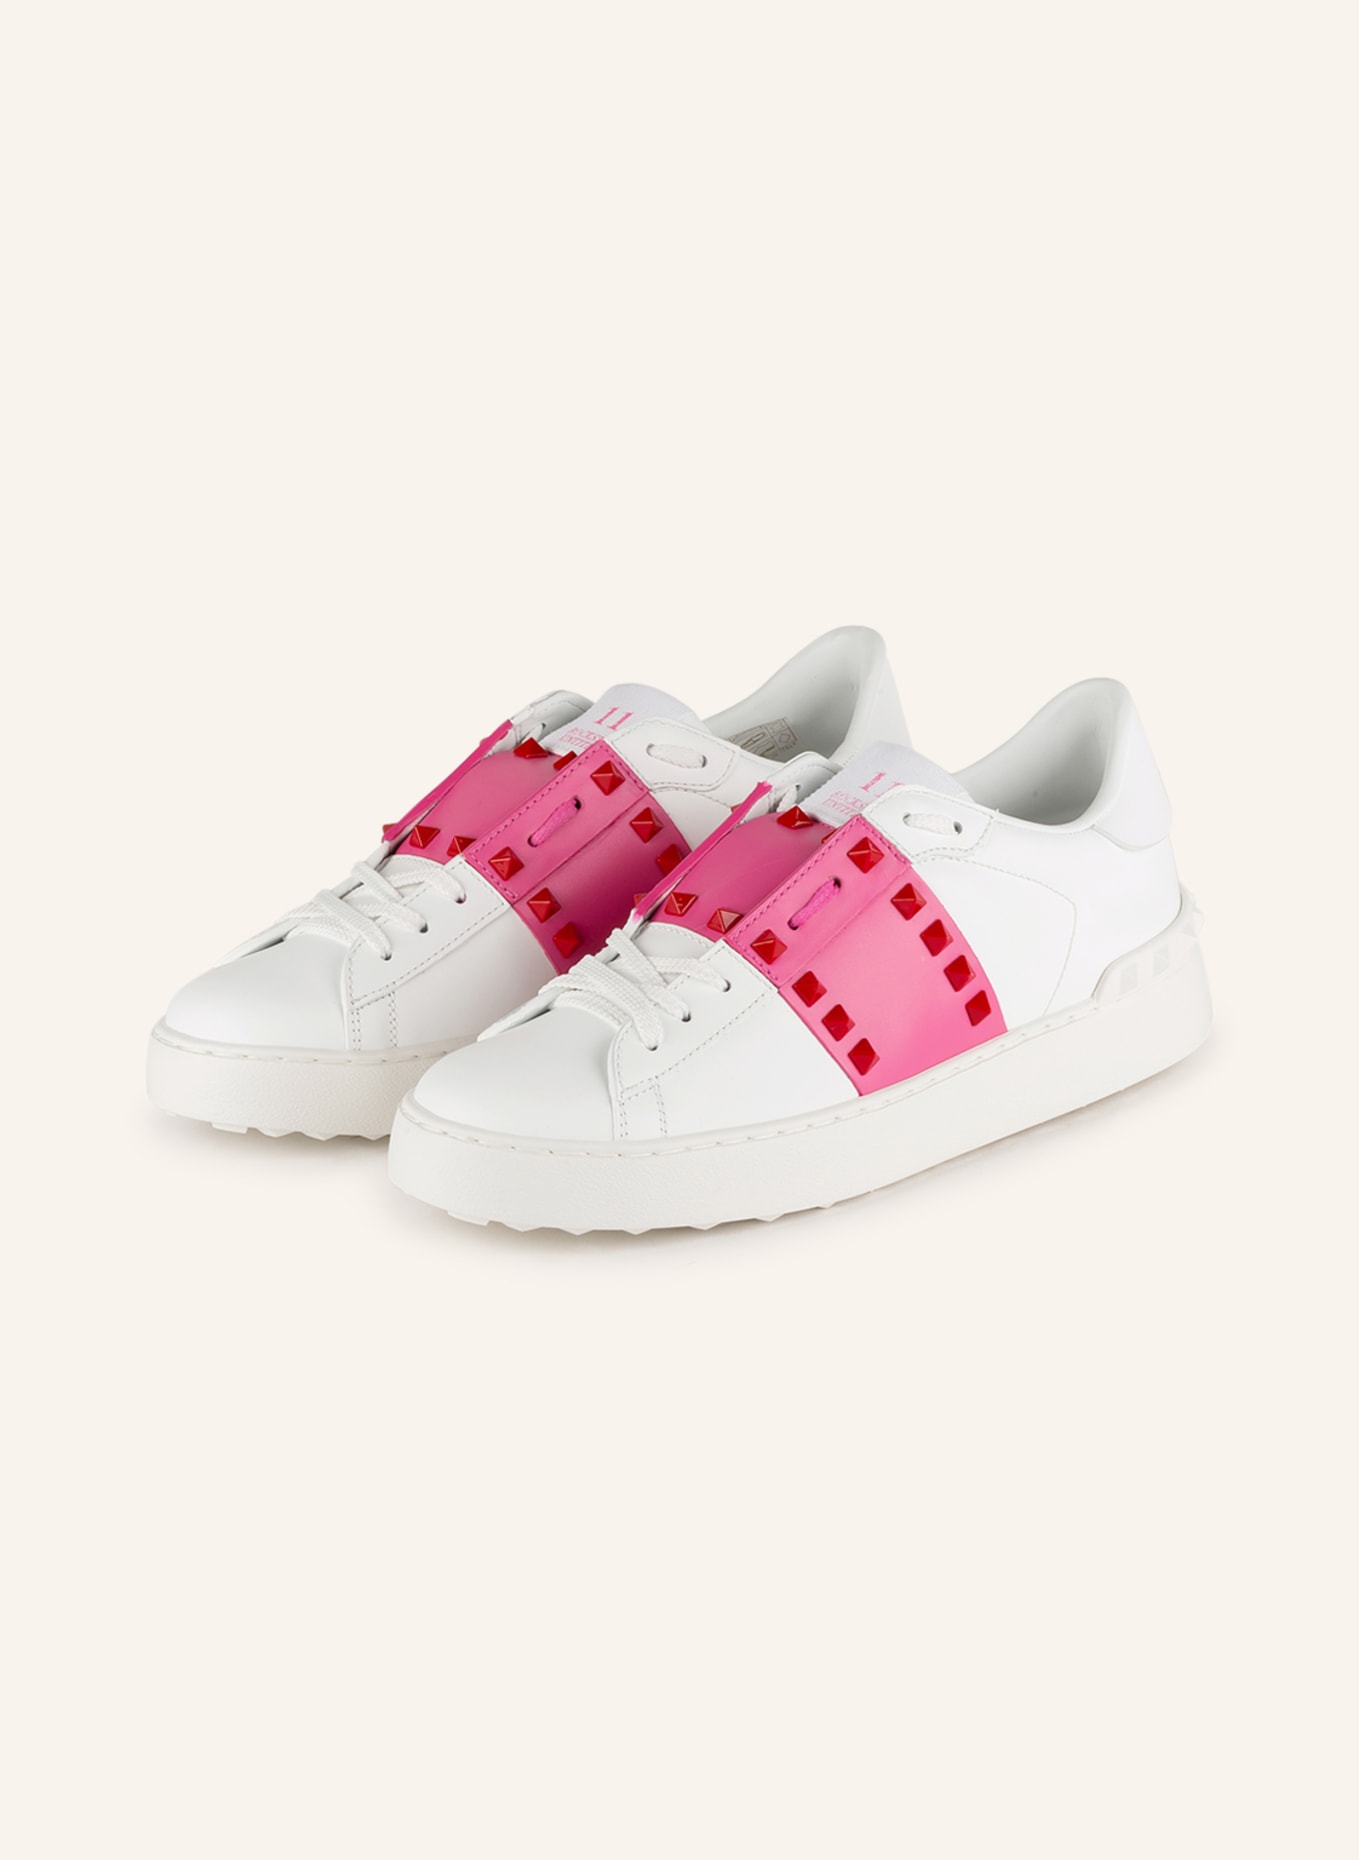 Habubu udredning Skat VALENTINO GARAVANI Sneakers ROCKSTUD UNTITLED in white/ pink